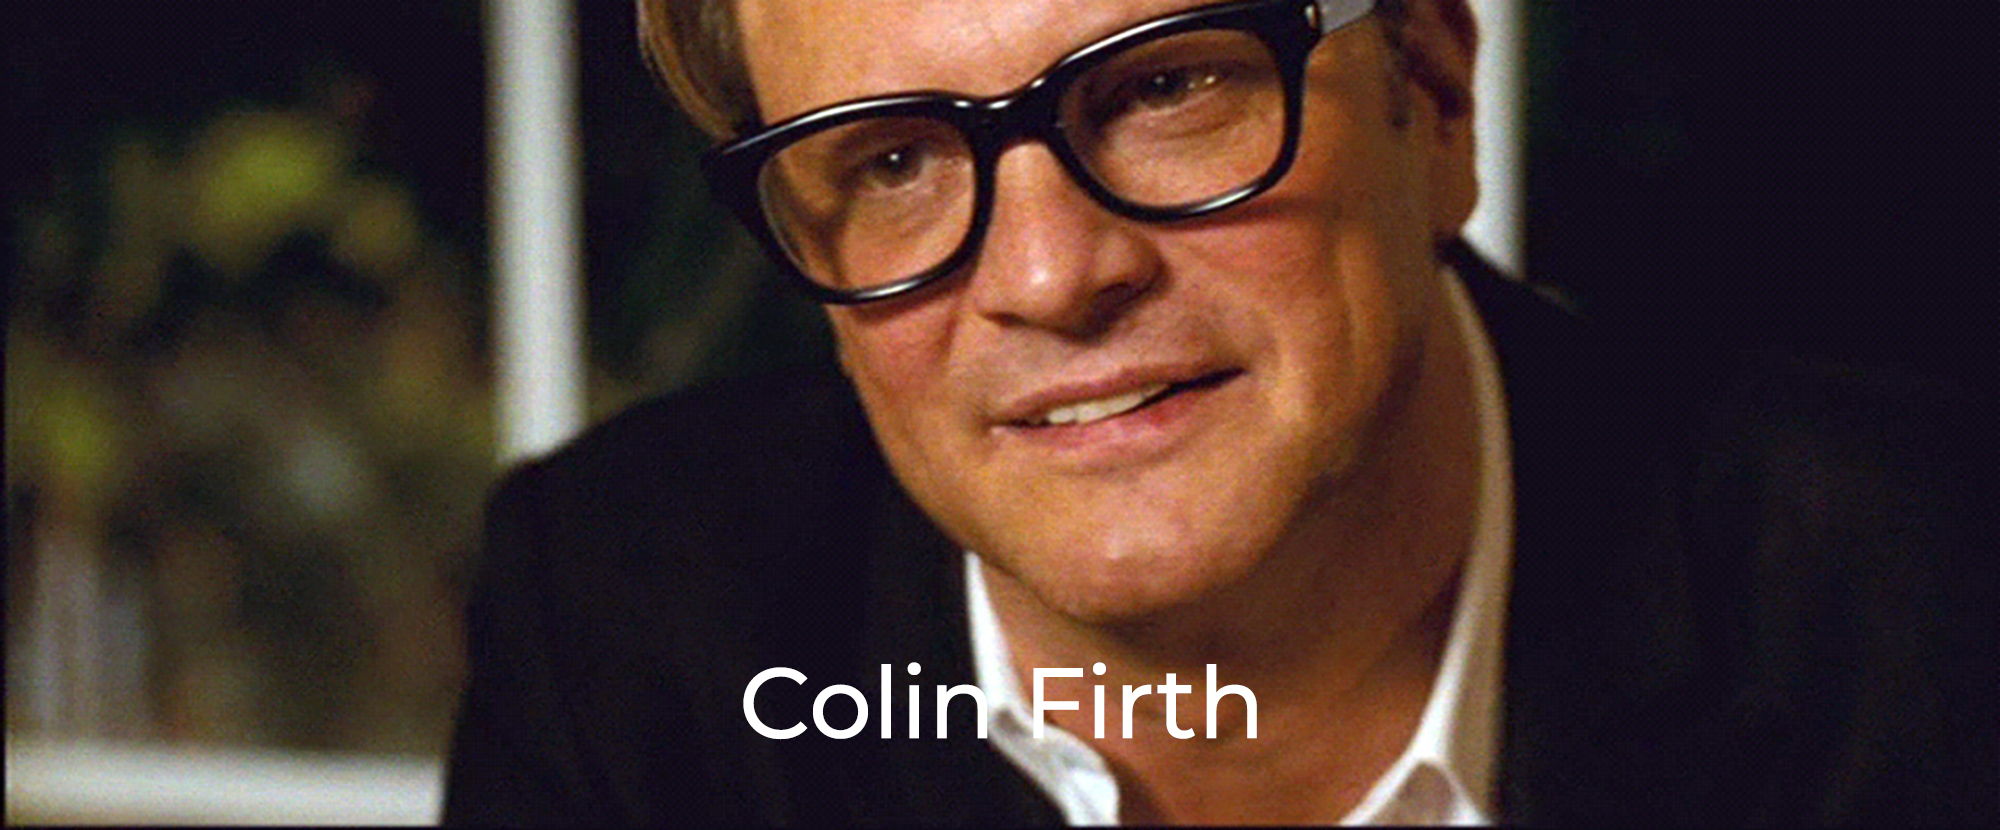 Colin-Firth-Single-Man-Header